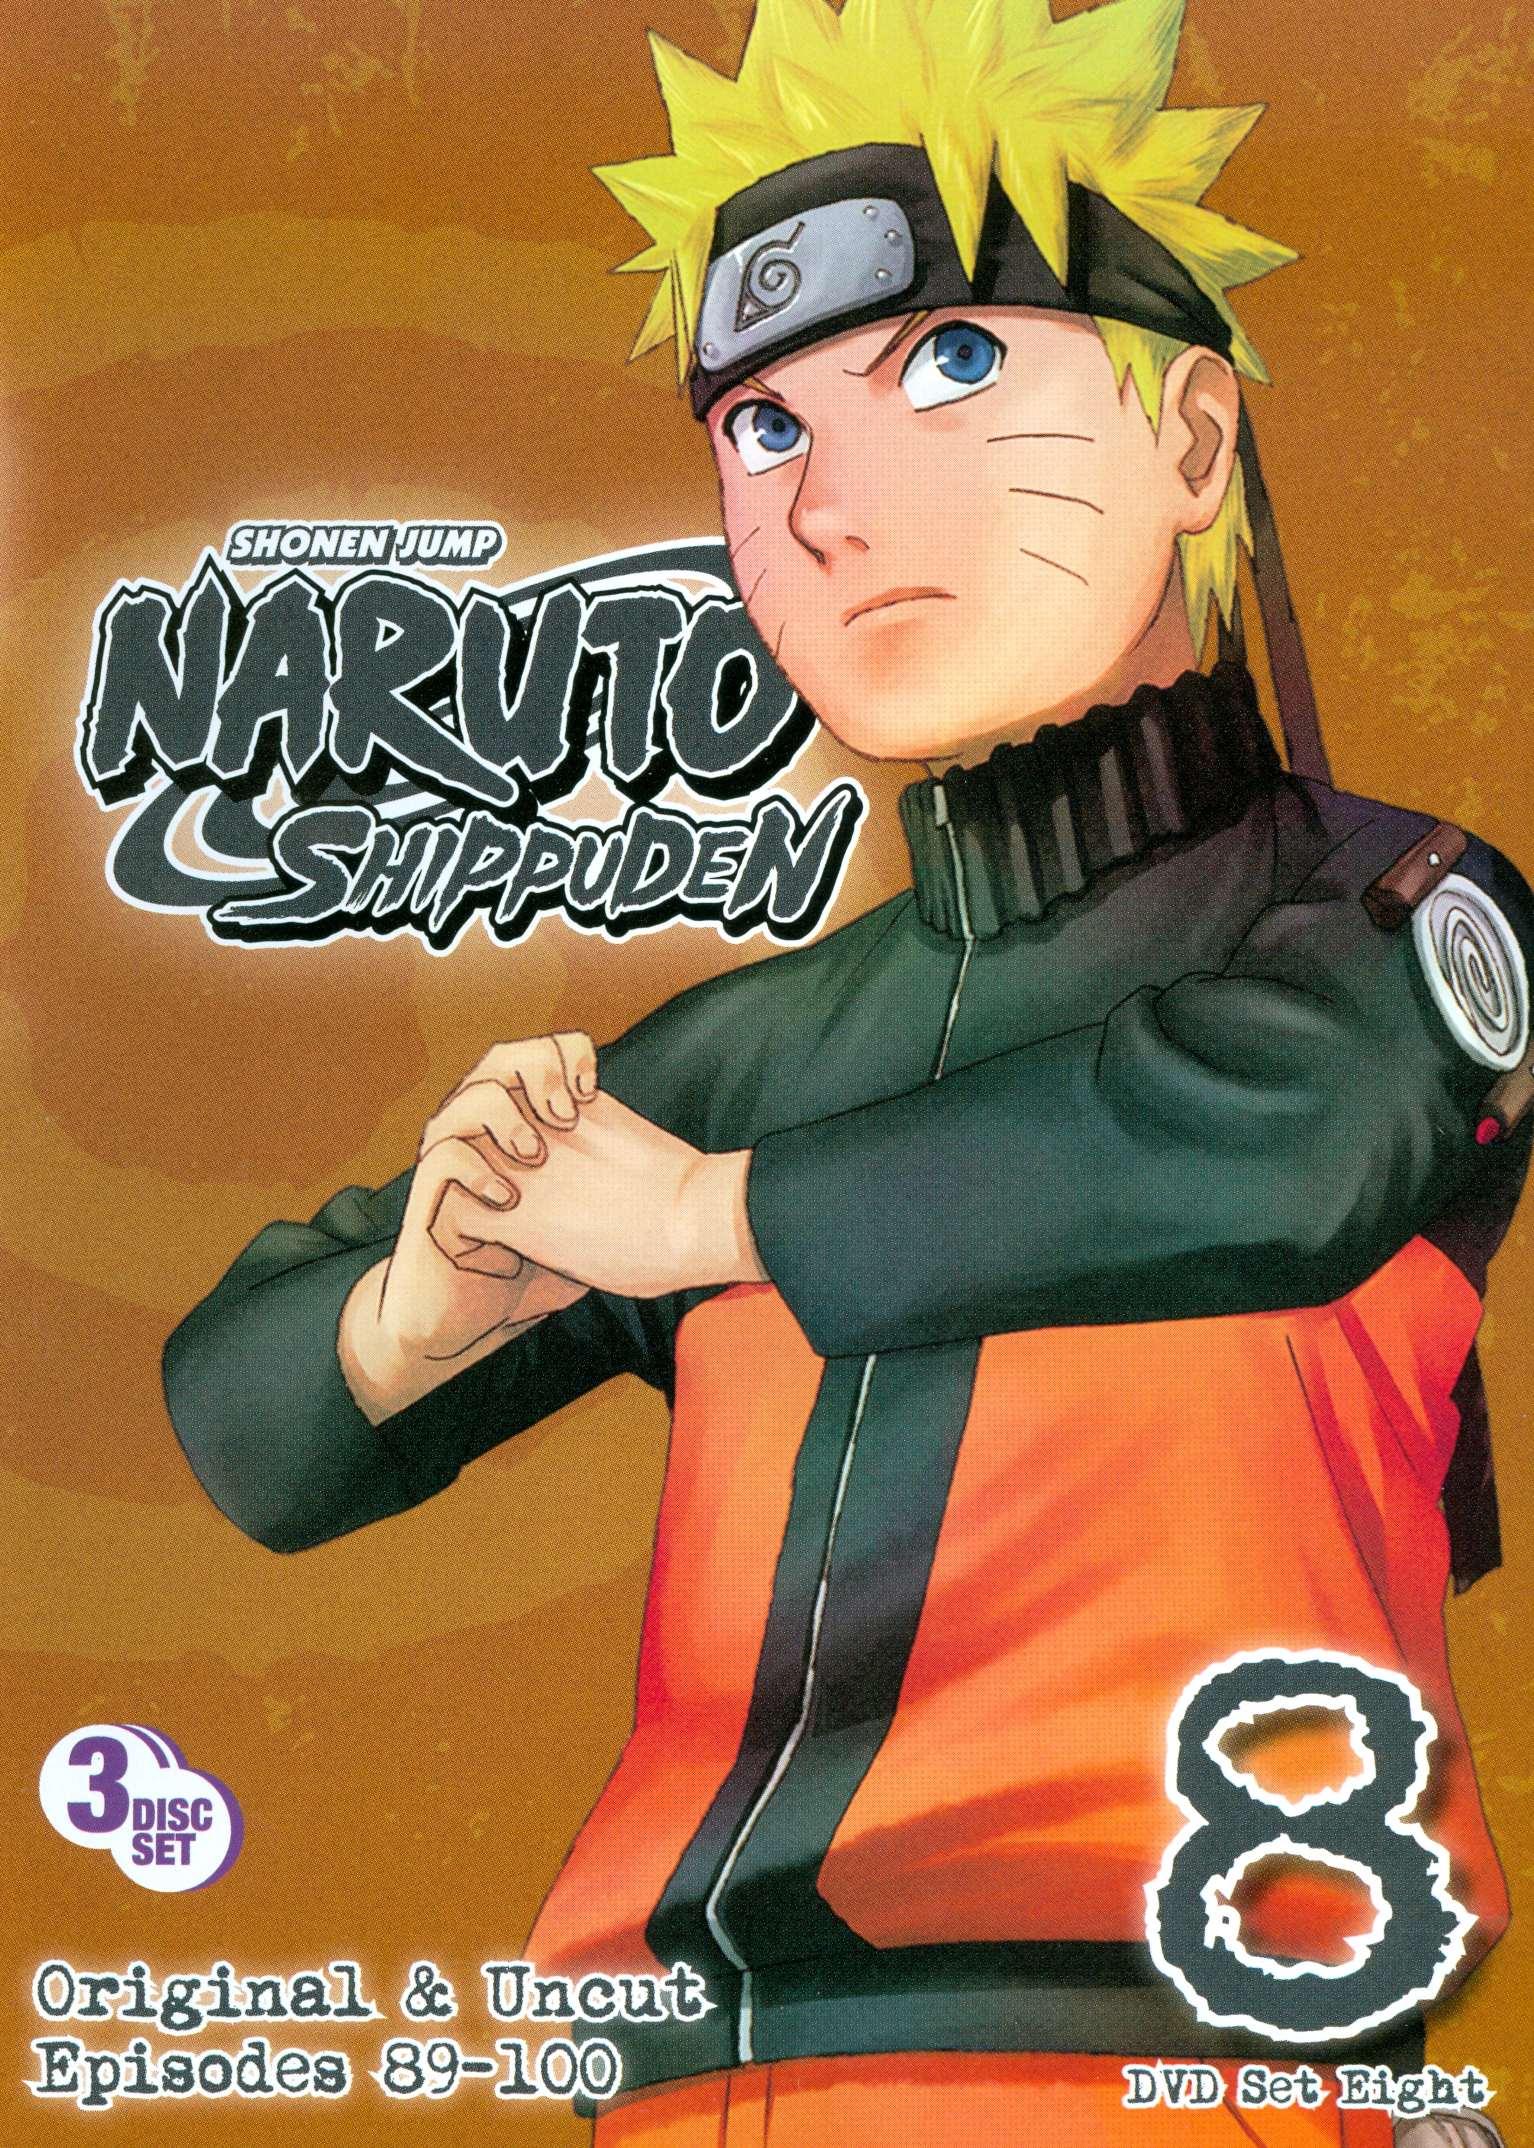 Naruto Shippuden Box Set 8 3 Discs Dvd Best Buy